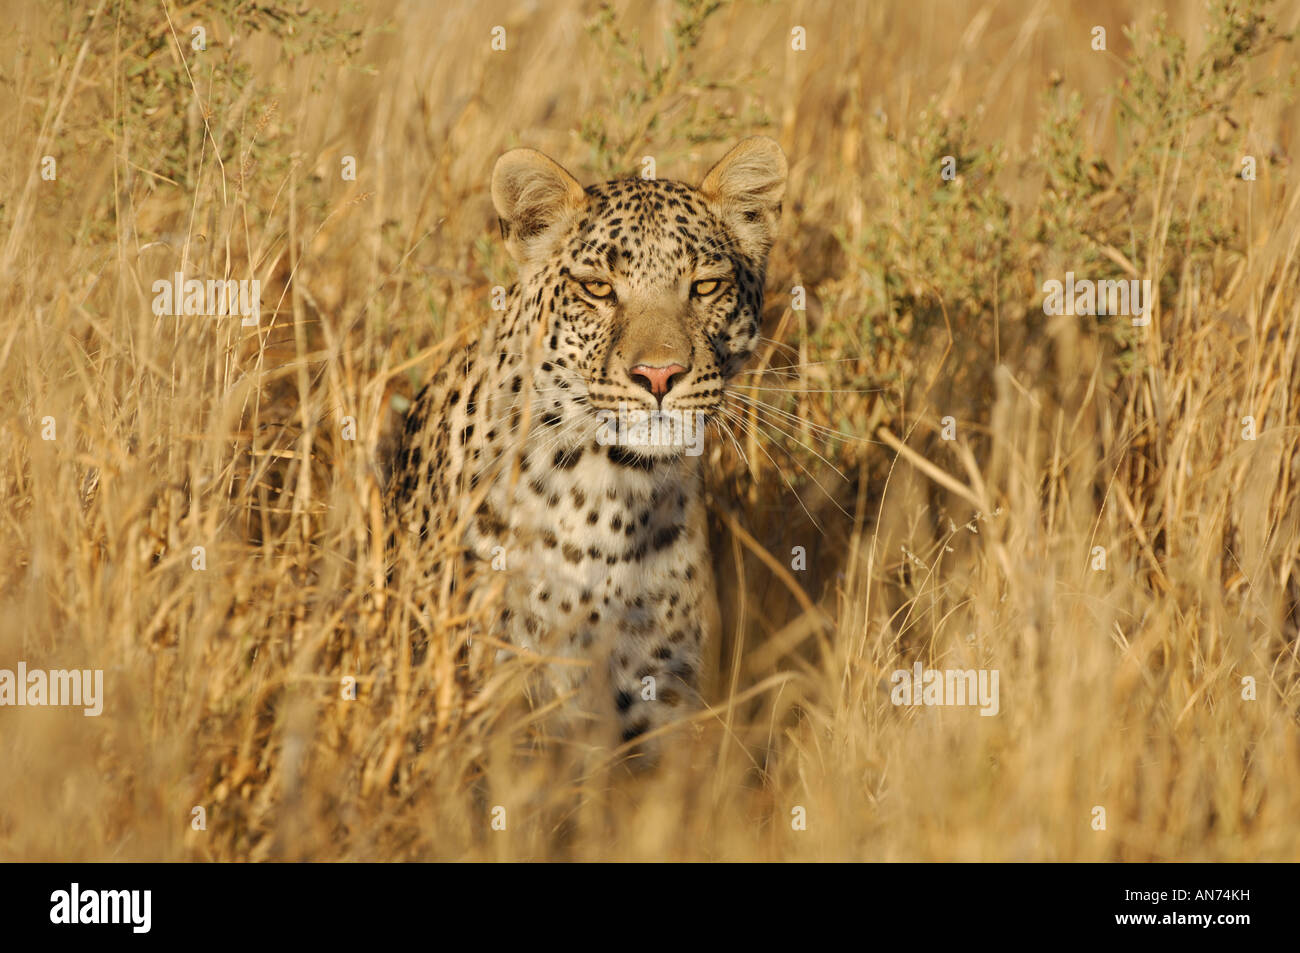 Image of an African leopard sitting among golden winter grasses, Okavango Delta, Botswana Stock Photo